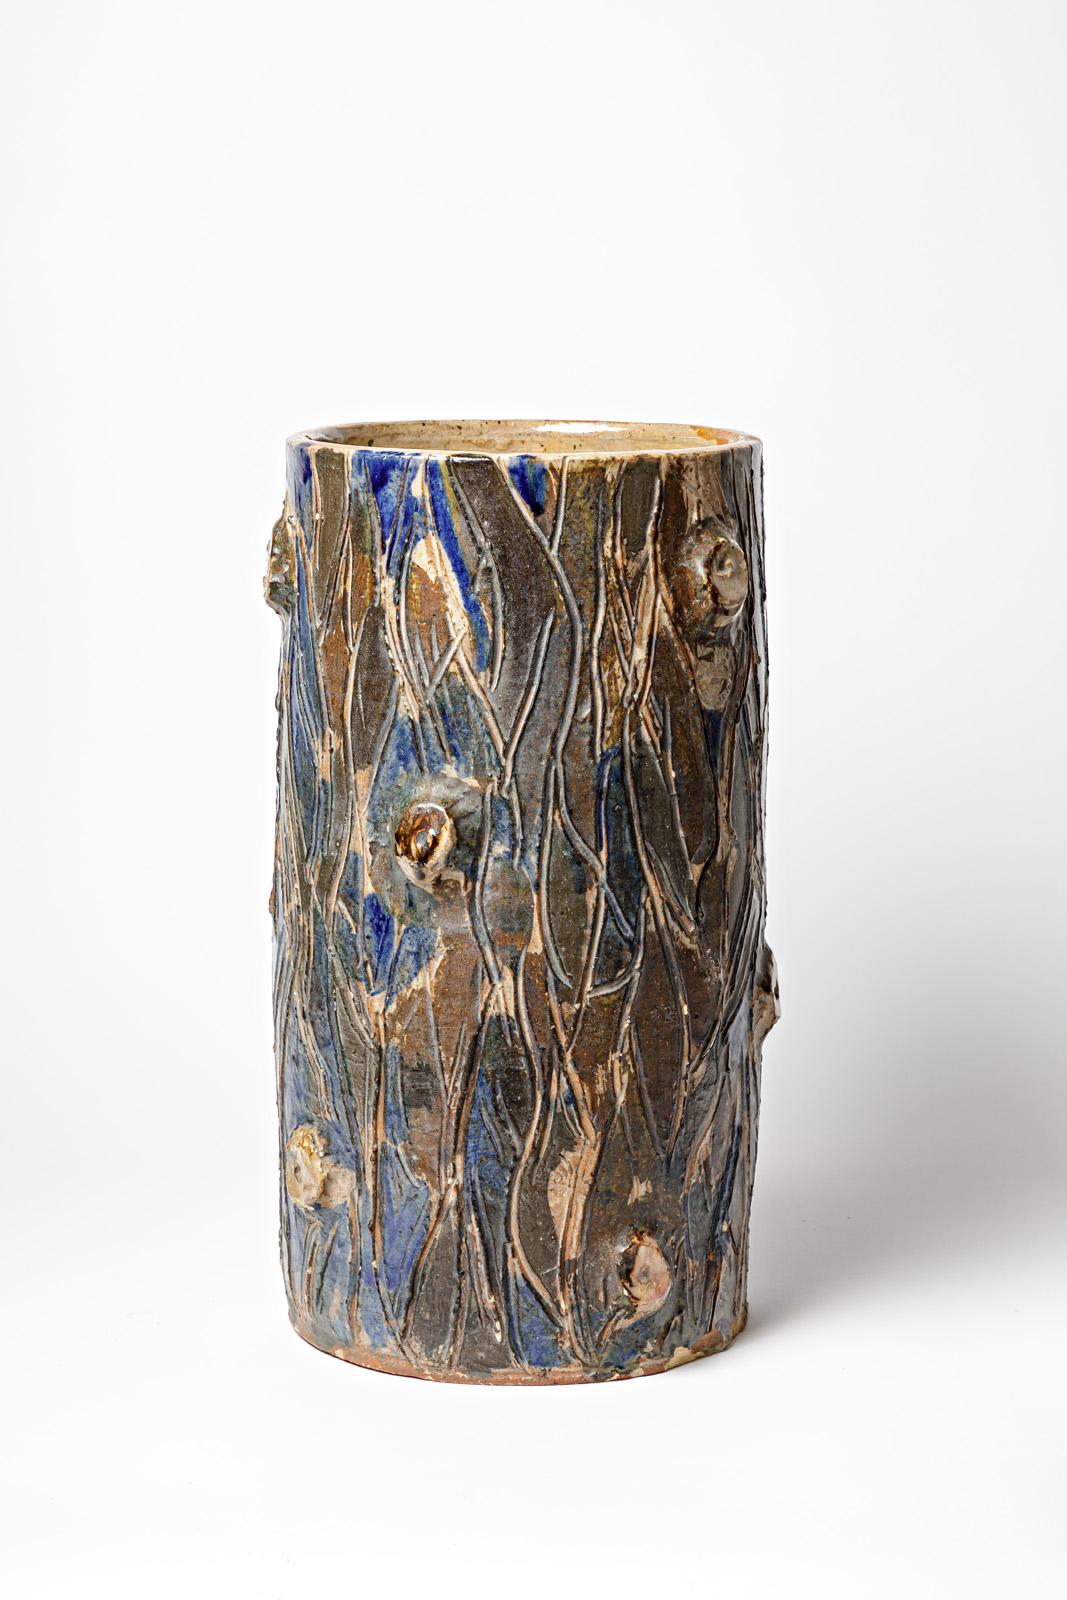 Art Deco Large Blue and Grey Stoneware Ceramic Vase by Lucien Talbot La Borne, 1940